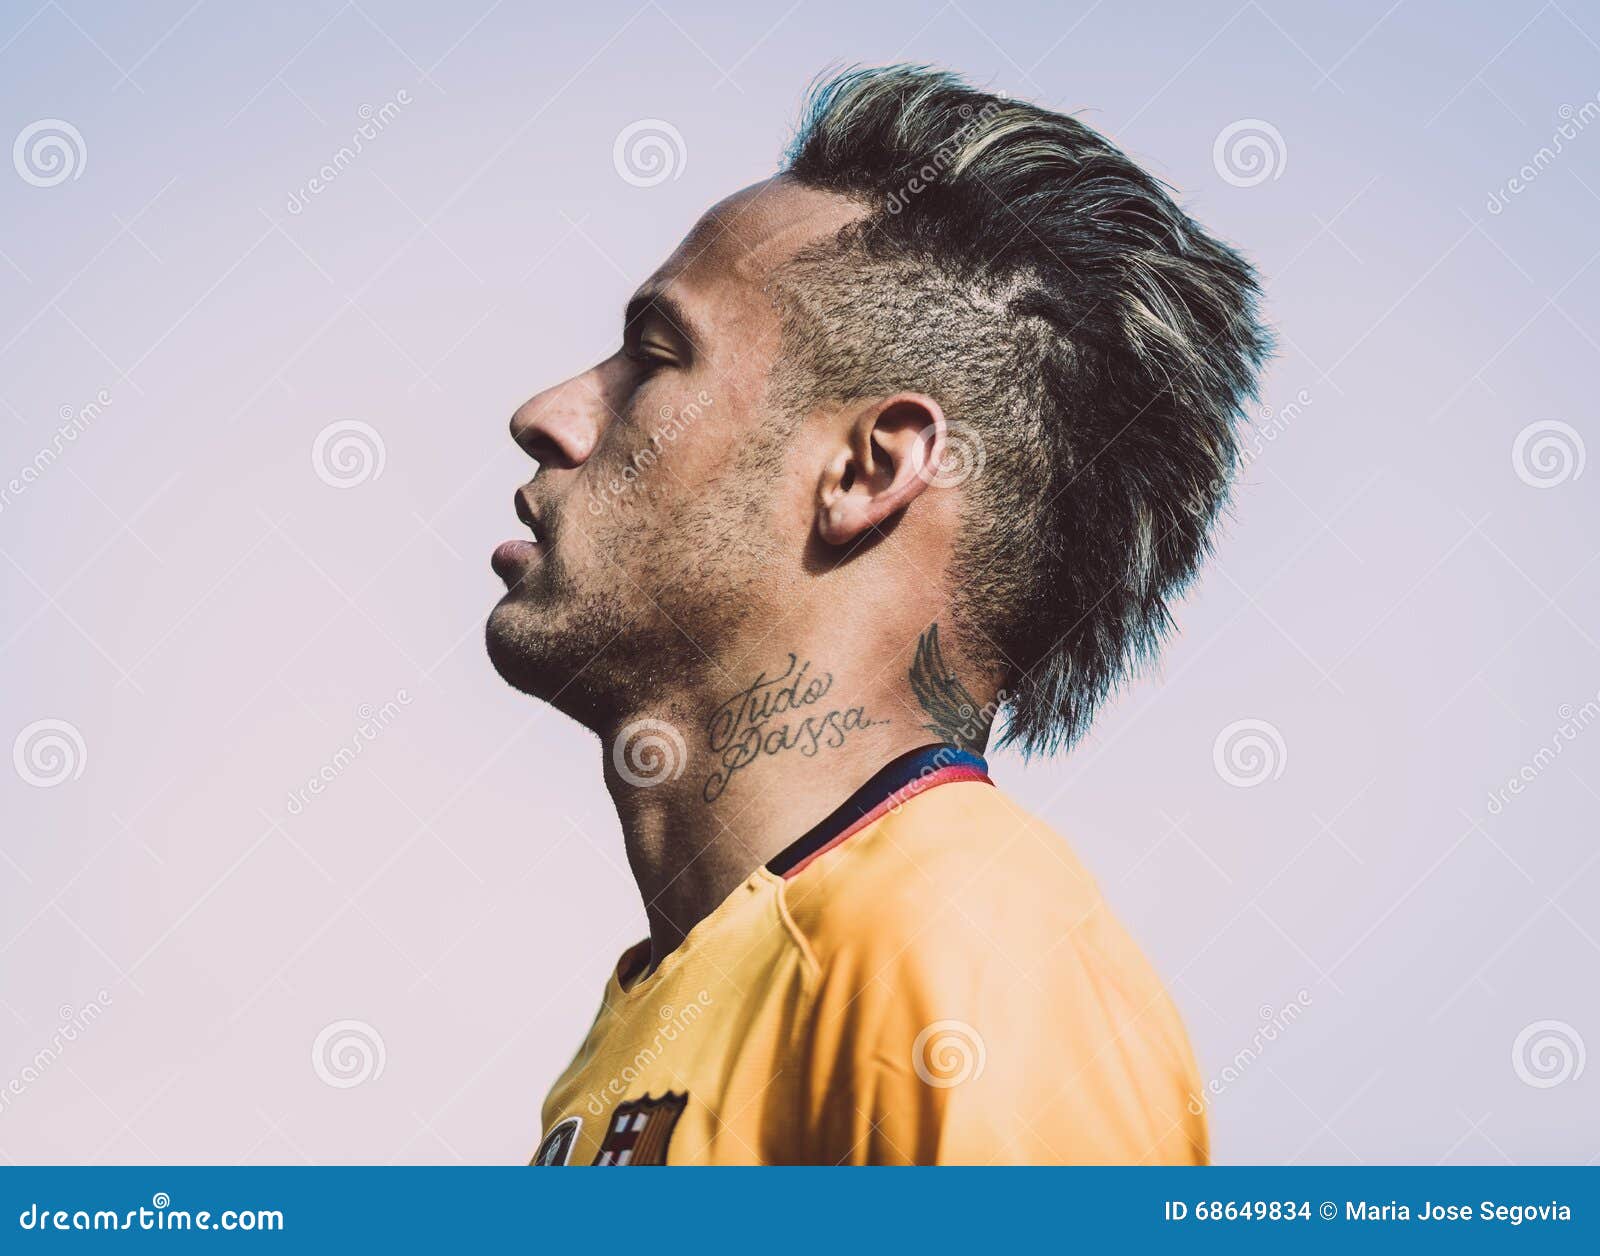 Neymar back to full health and relishing Man U | beIN SPORTS